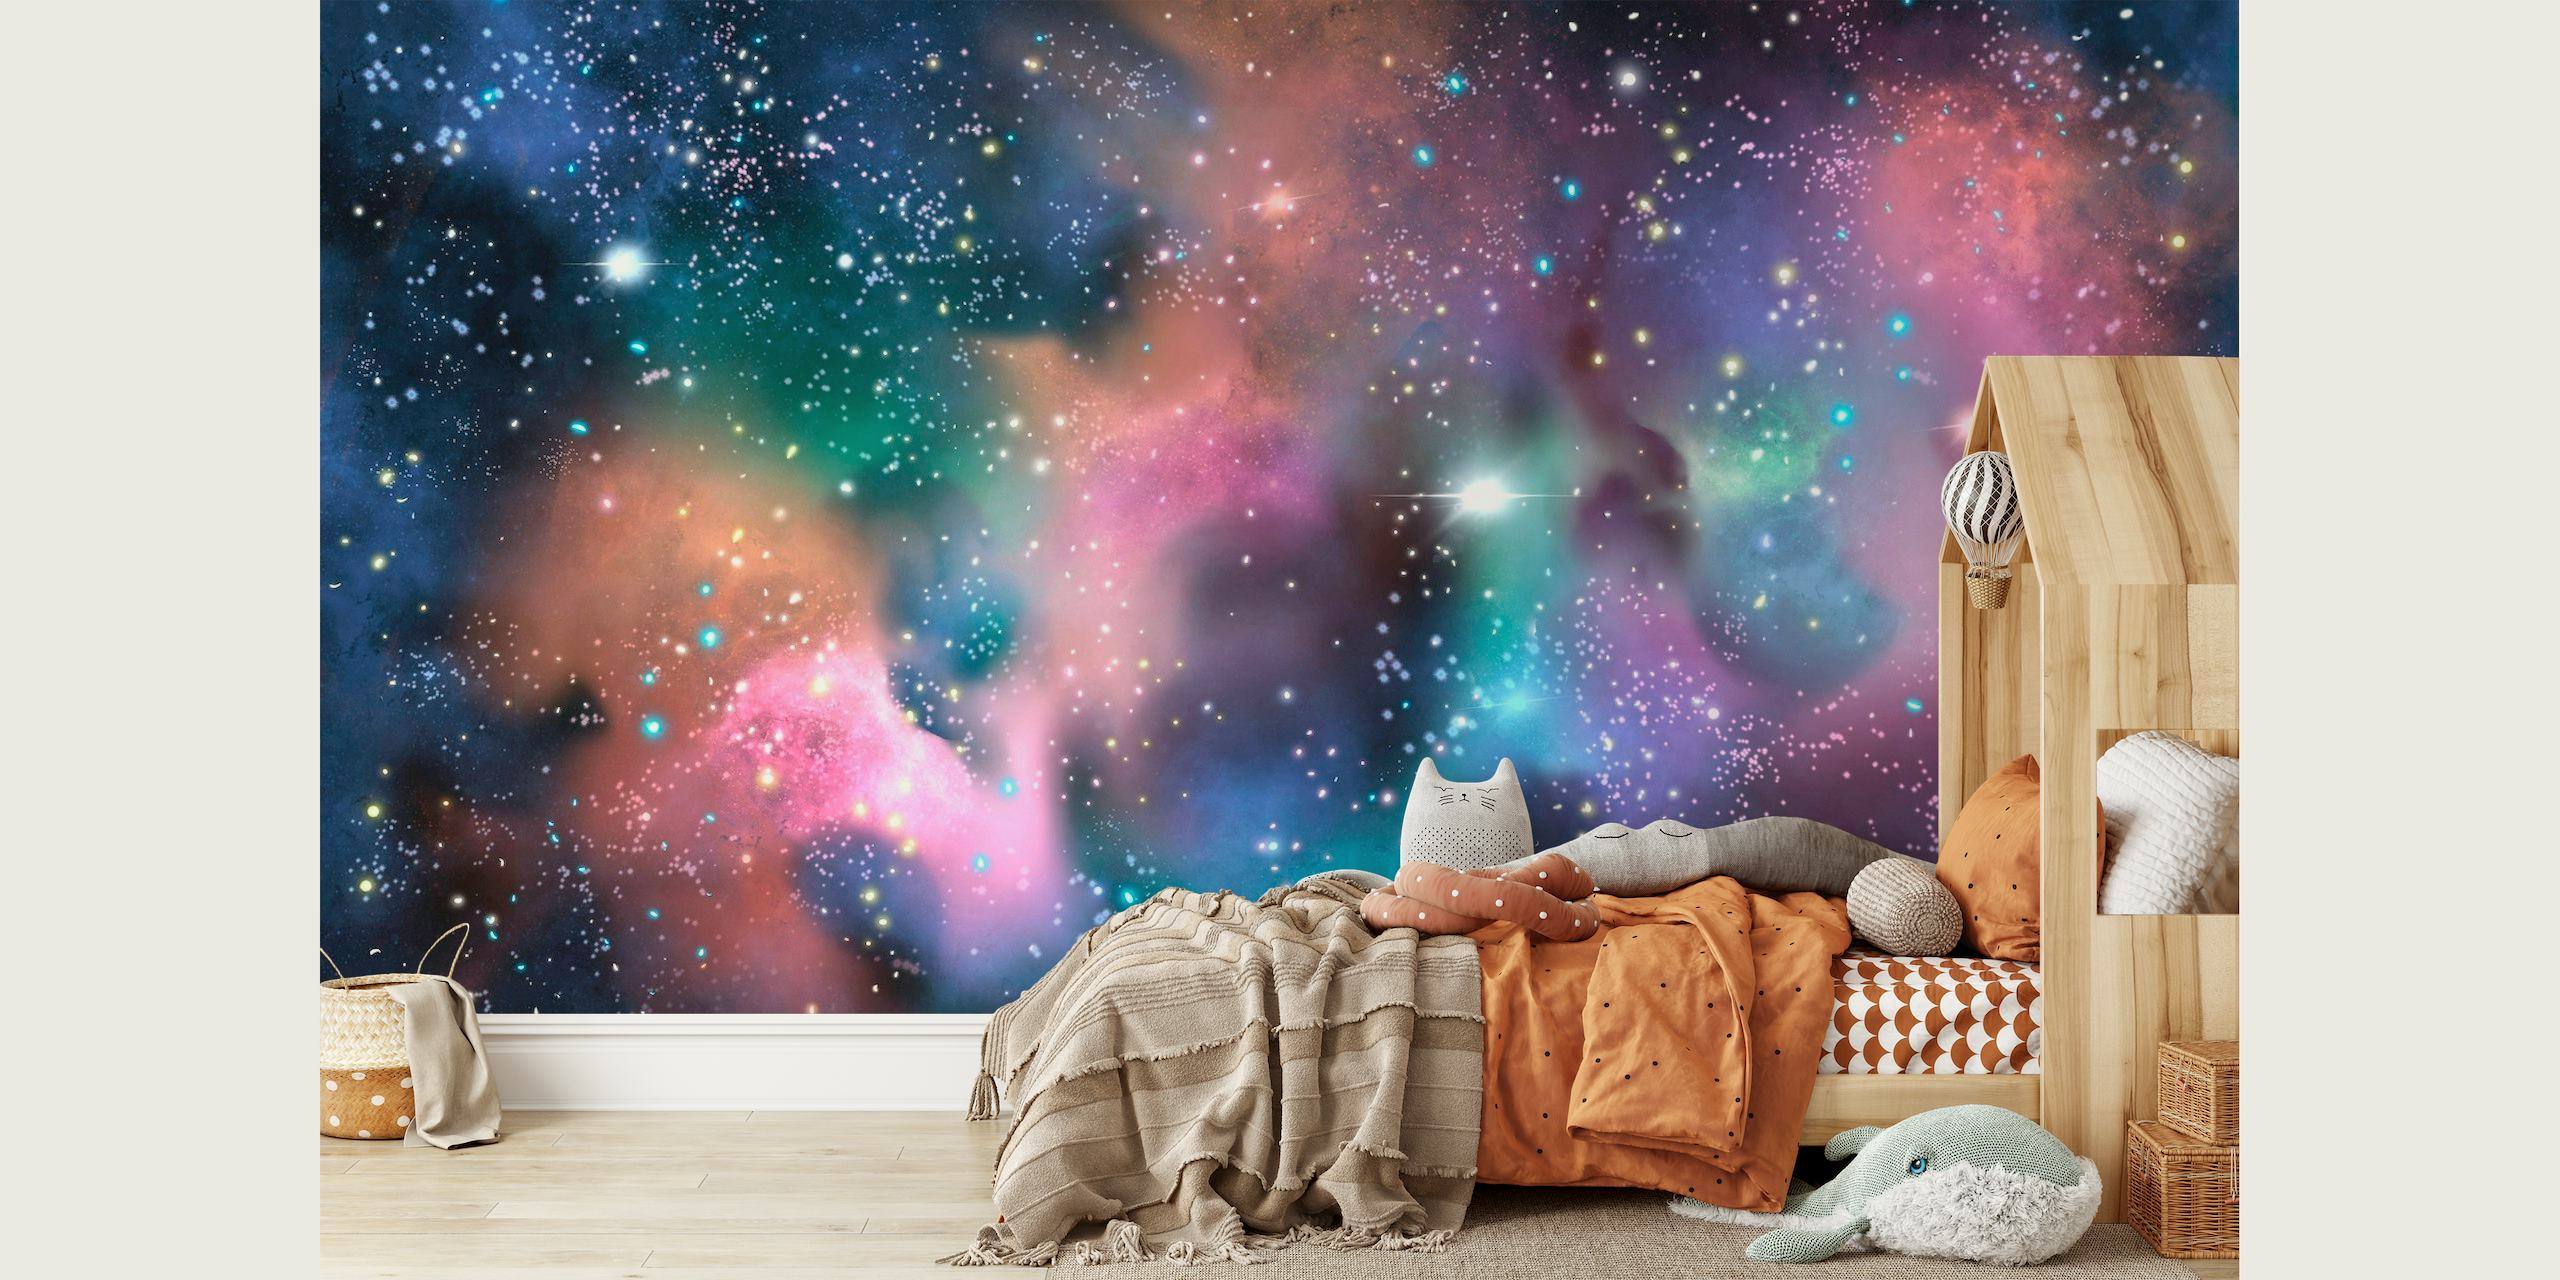 Dreamy Galaxy wallpaper